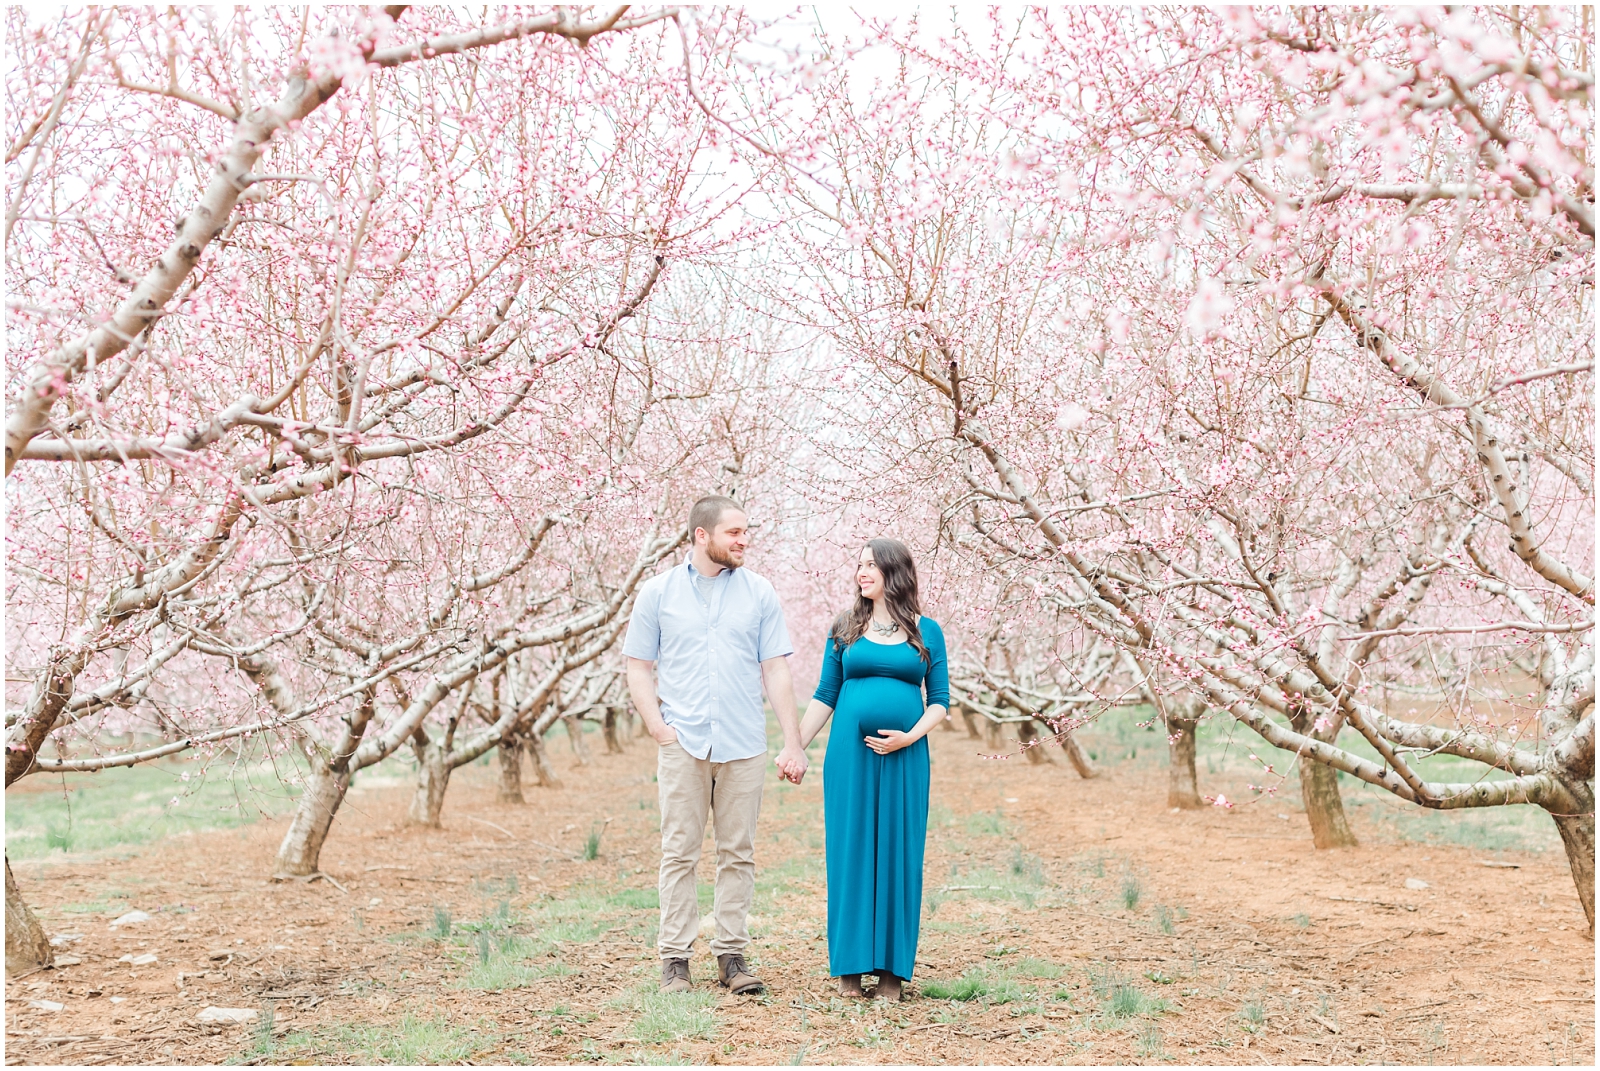 west virginia maternity photography peach blossoms spring photos maryland photographer